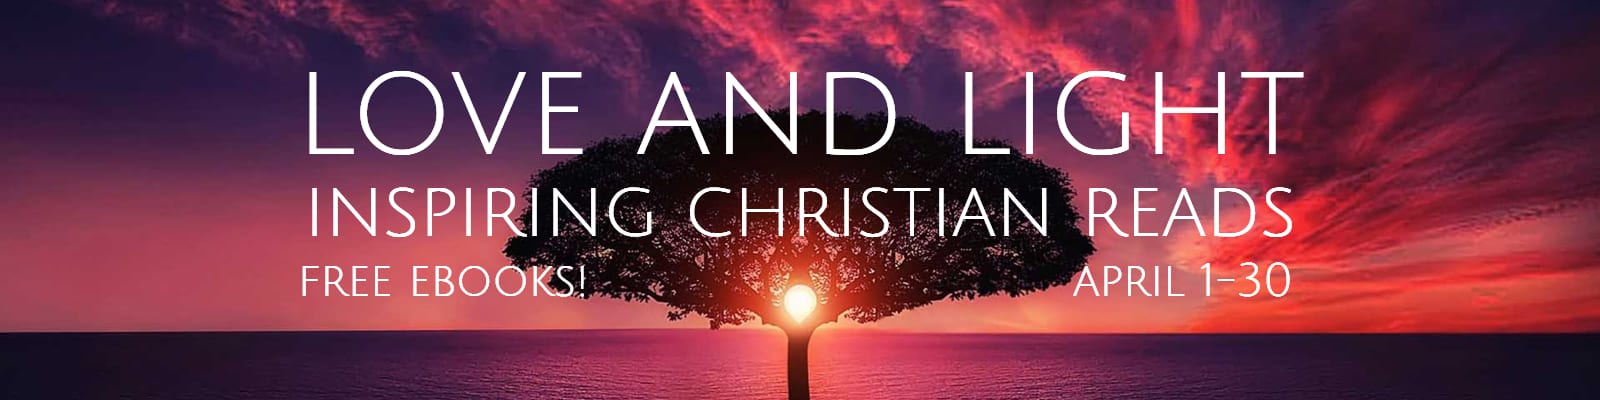 Love and Light Inspiring Christian Reads